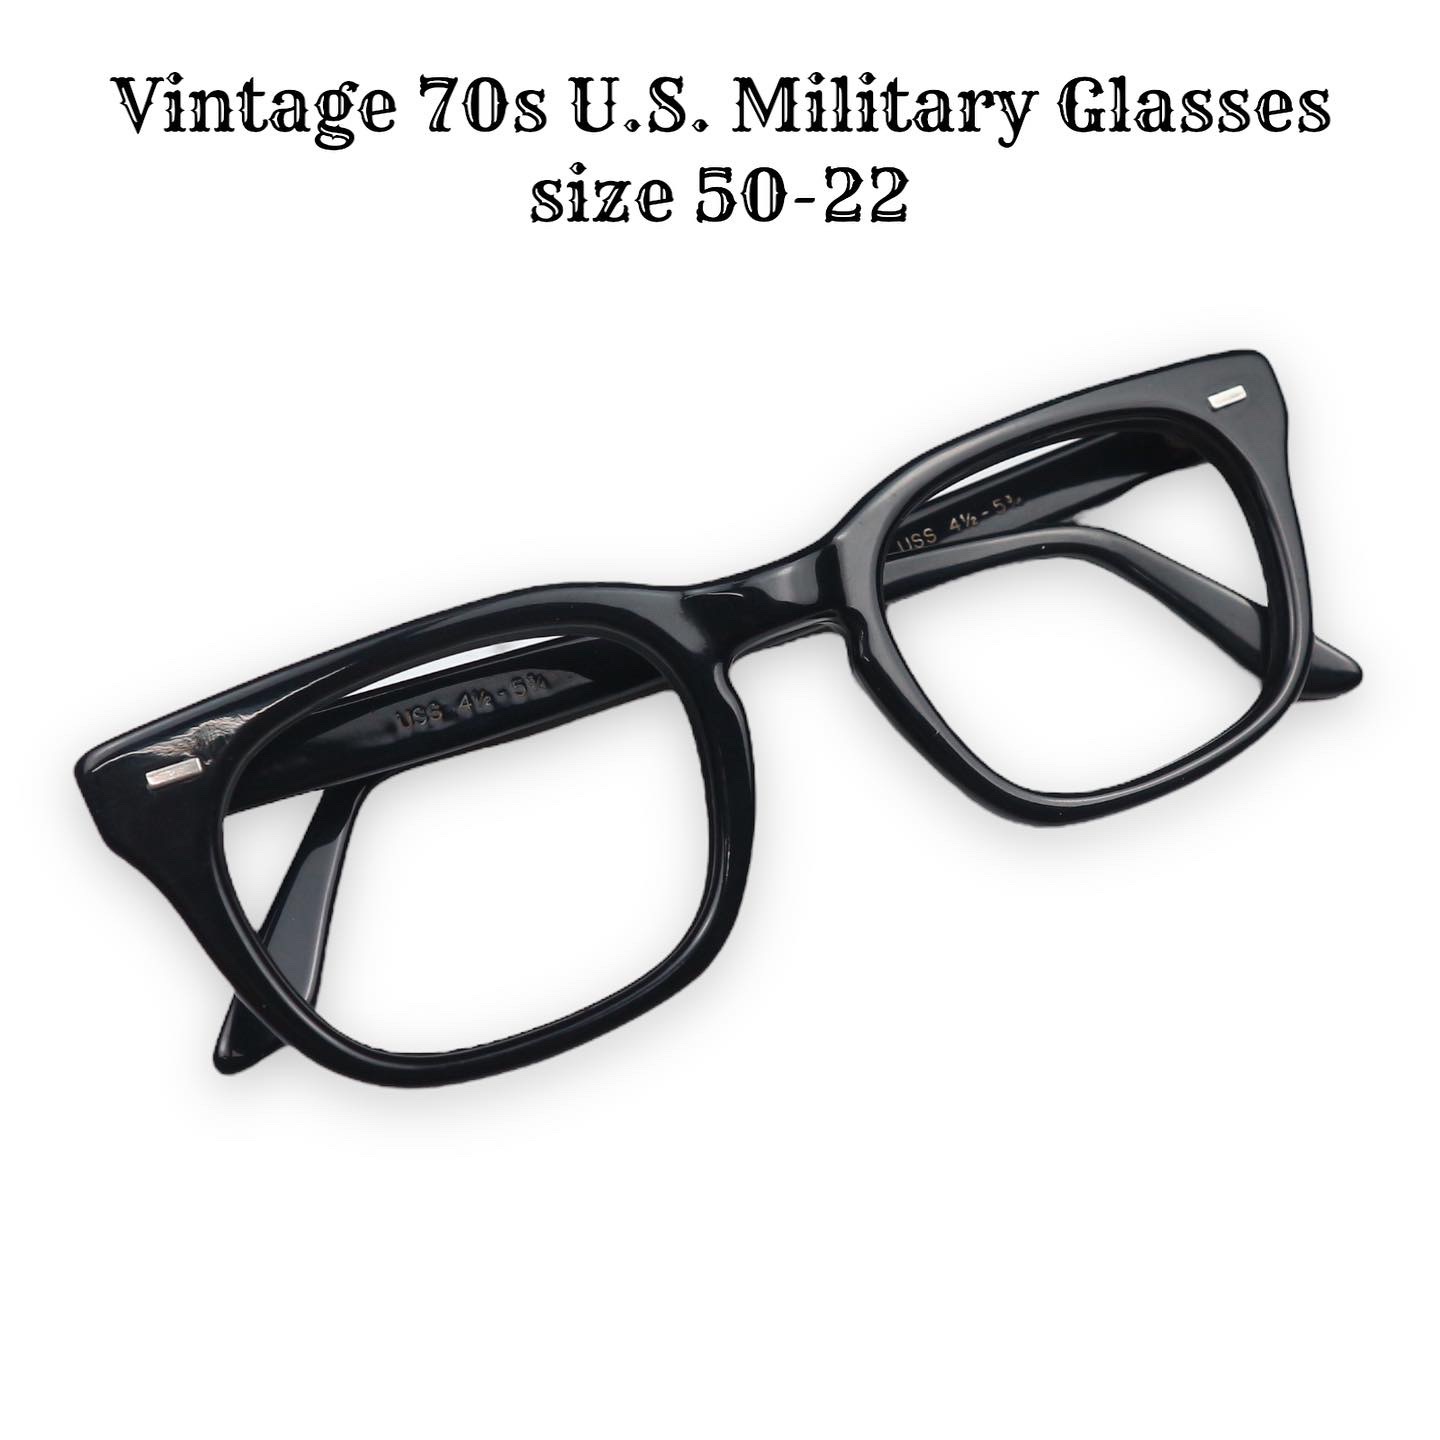 Vintage 70s U.S. Military Glasses Size 50-22